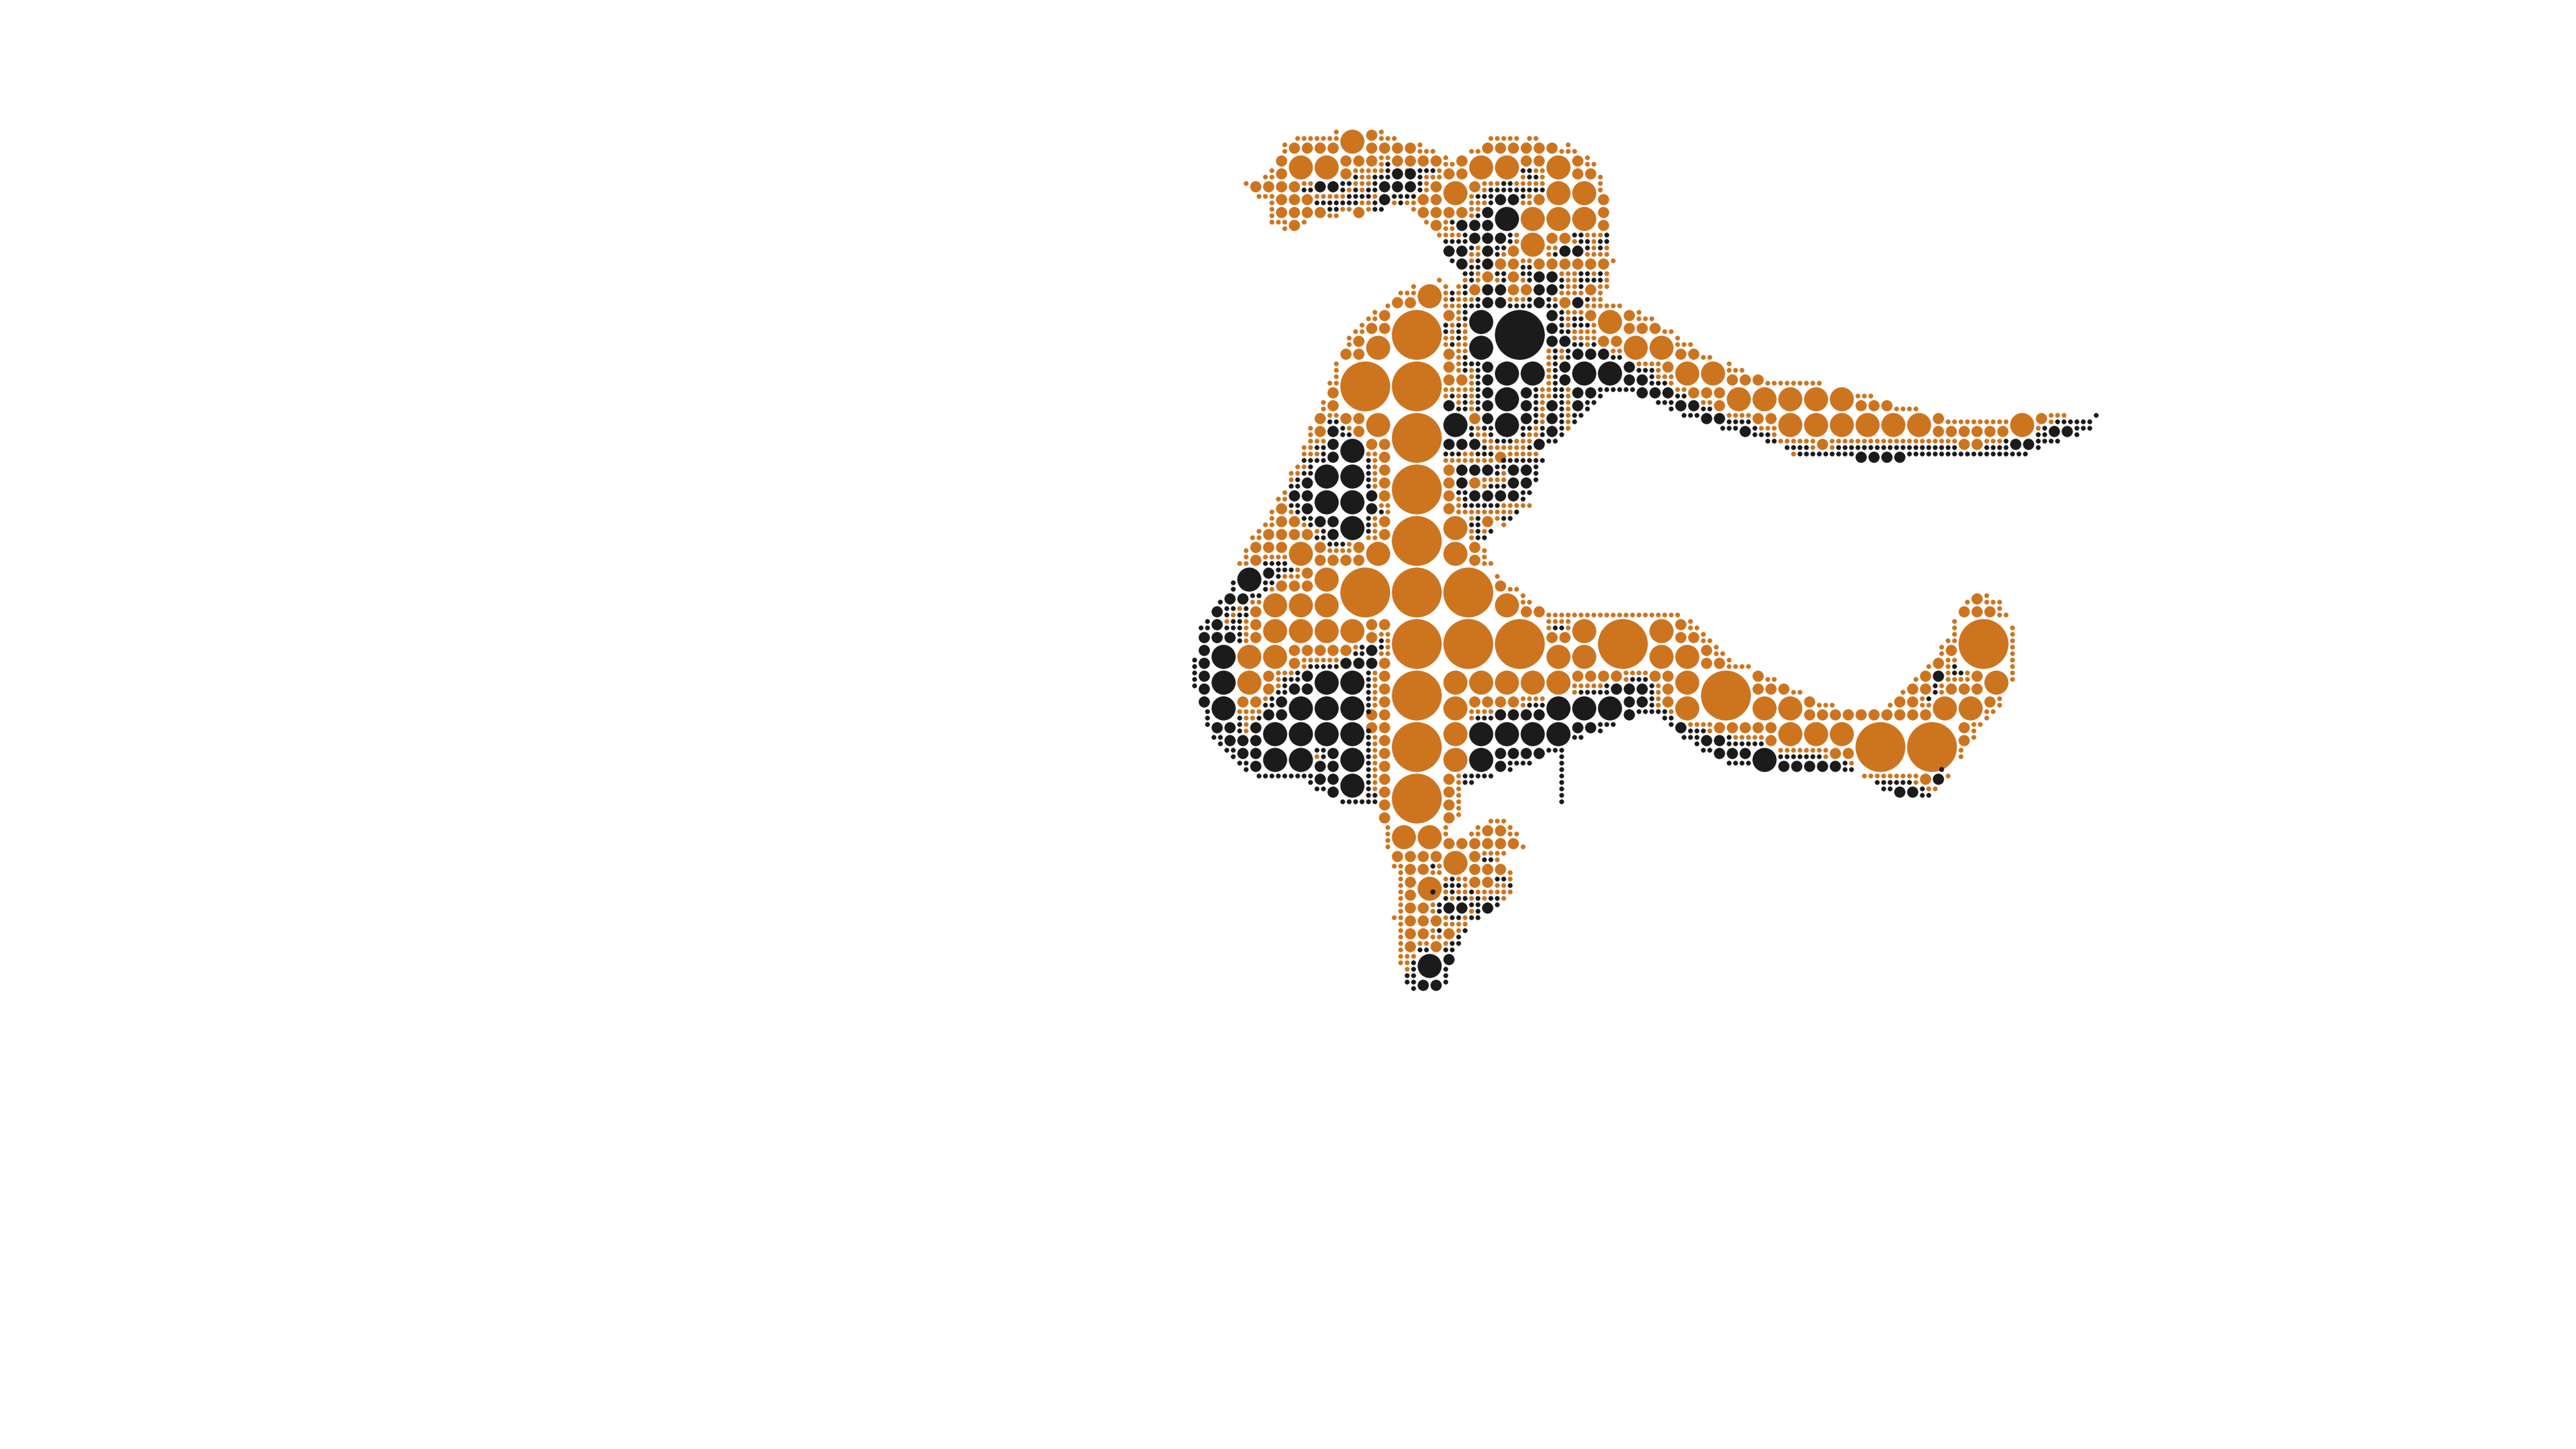 long jump silhouette